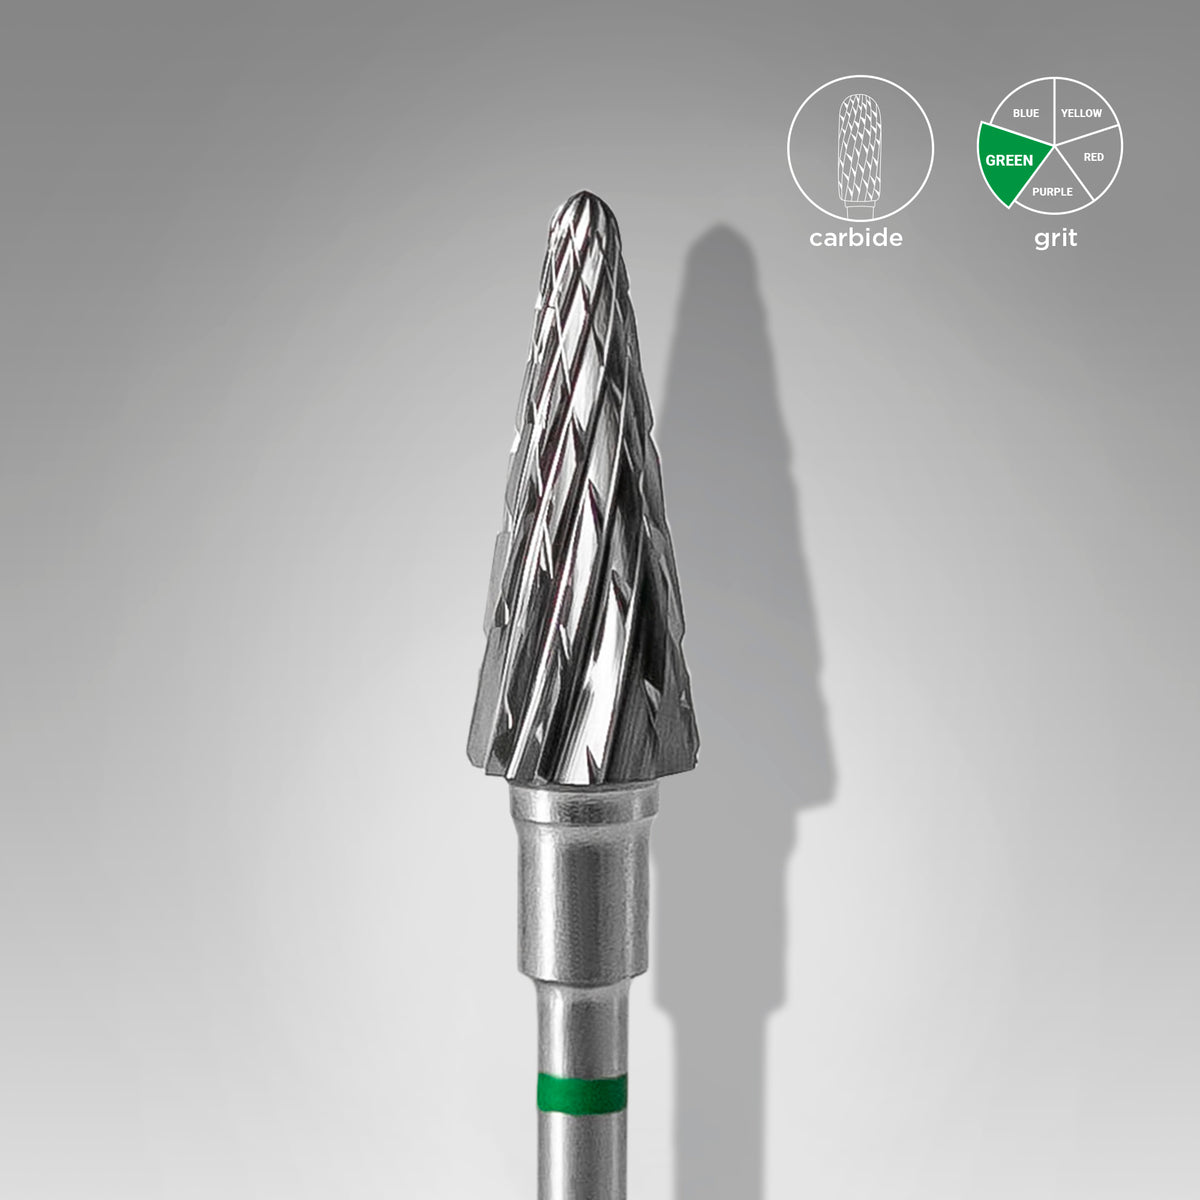 Carbide nail drill bit cone green EXPERT head diameter 6 mm / working part 14 mm